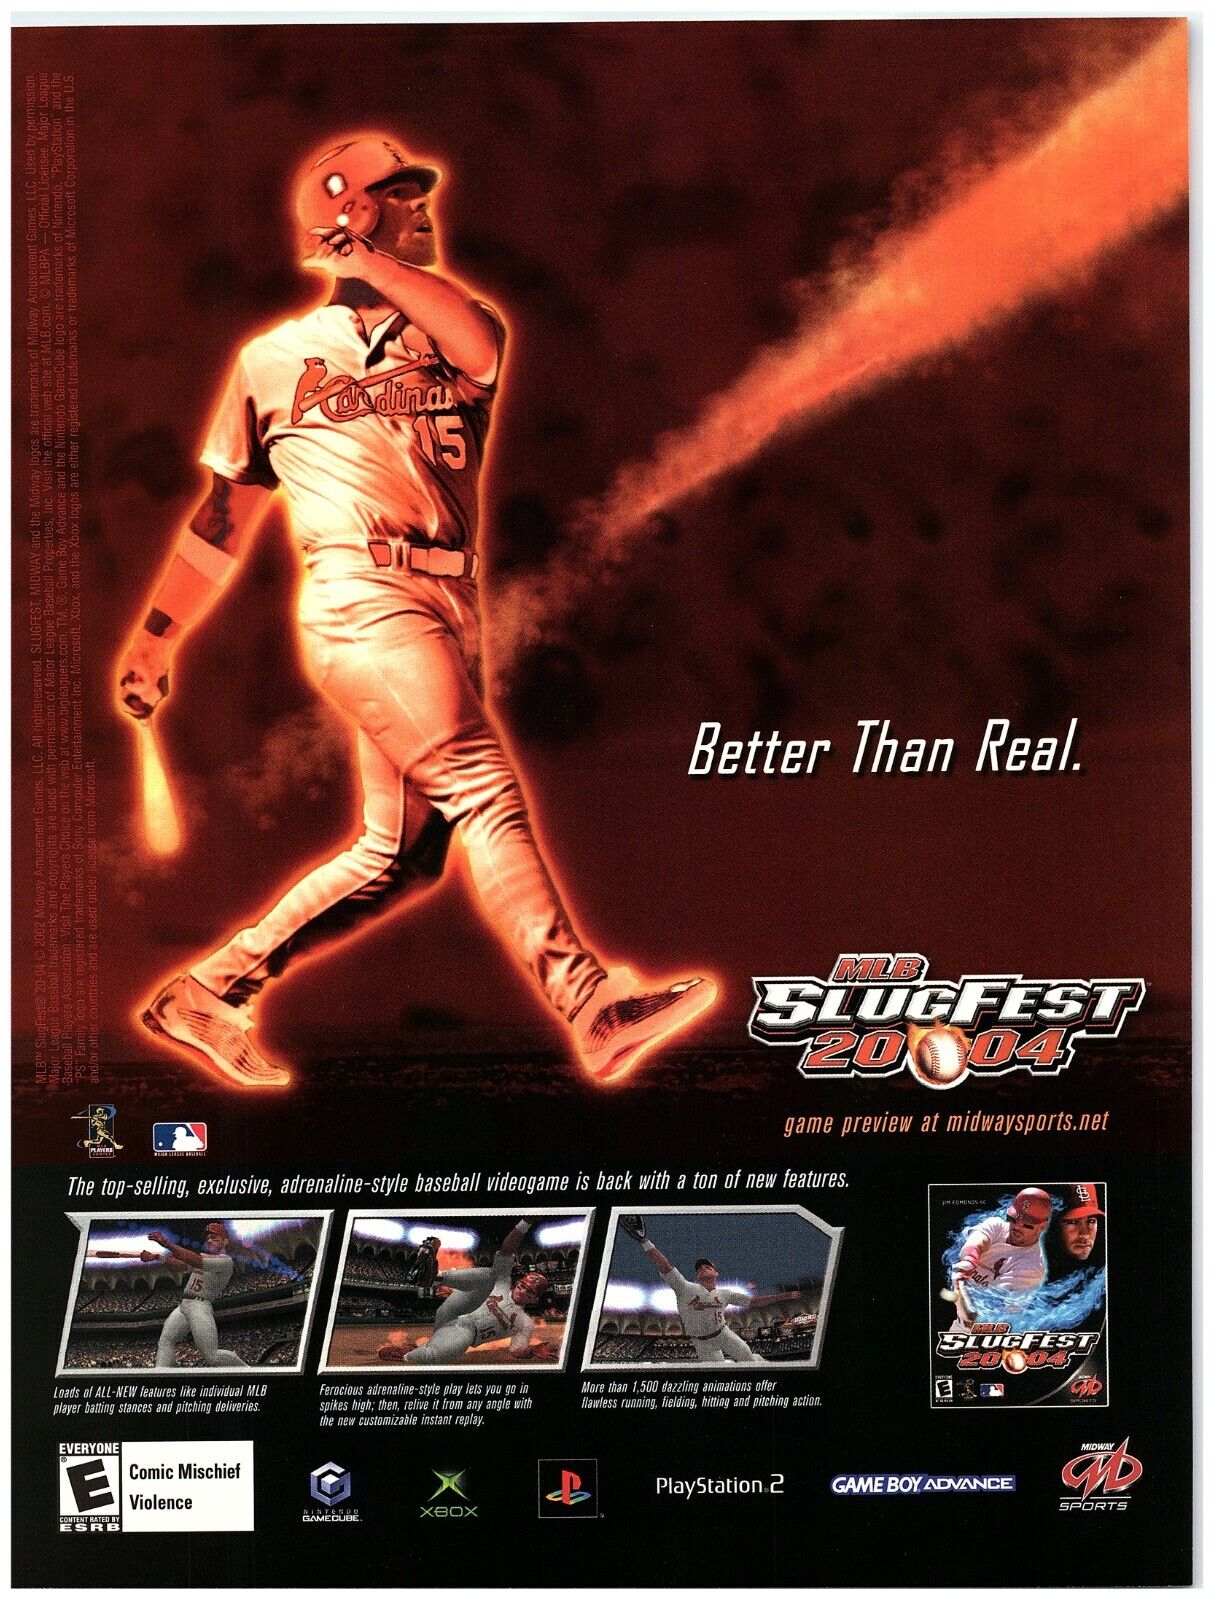 2003 MLB Slug Fest 2004 Print Ad, Jim Edmonds St. Louis Cardinals Video Game